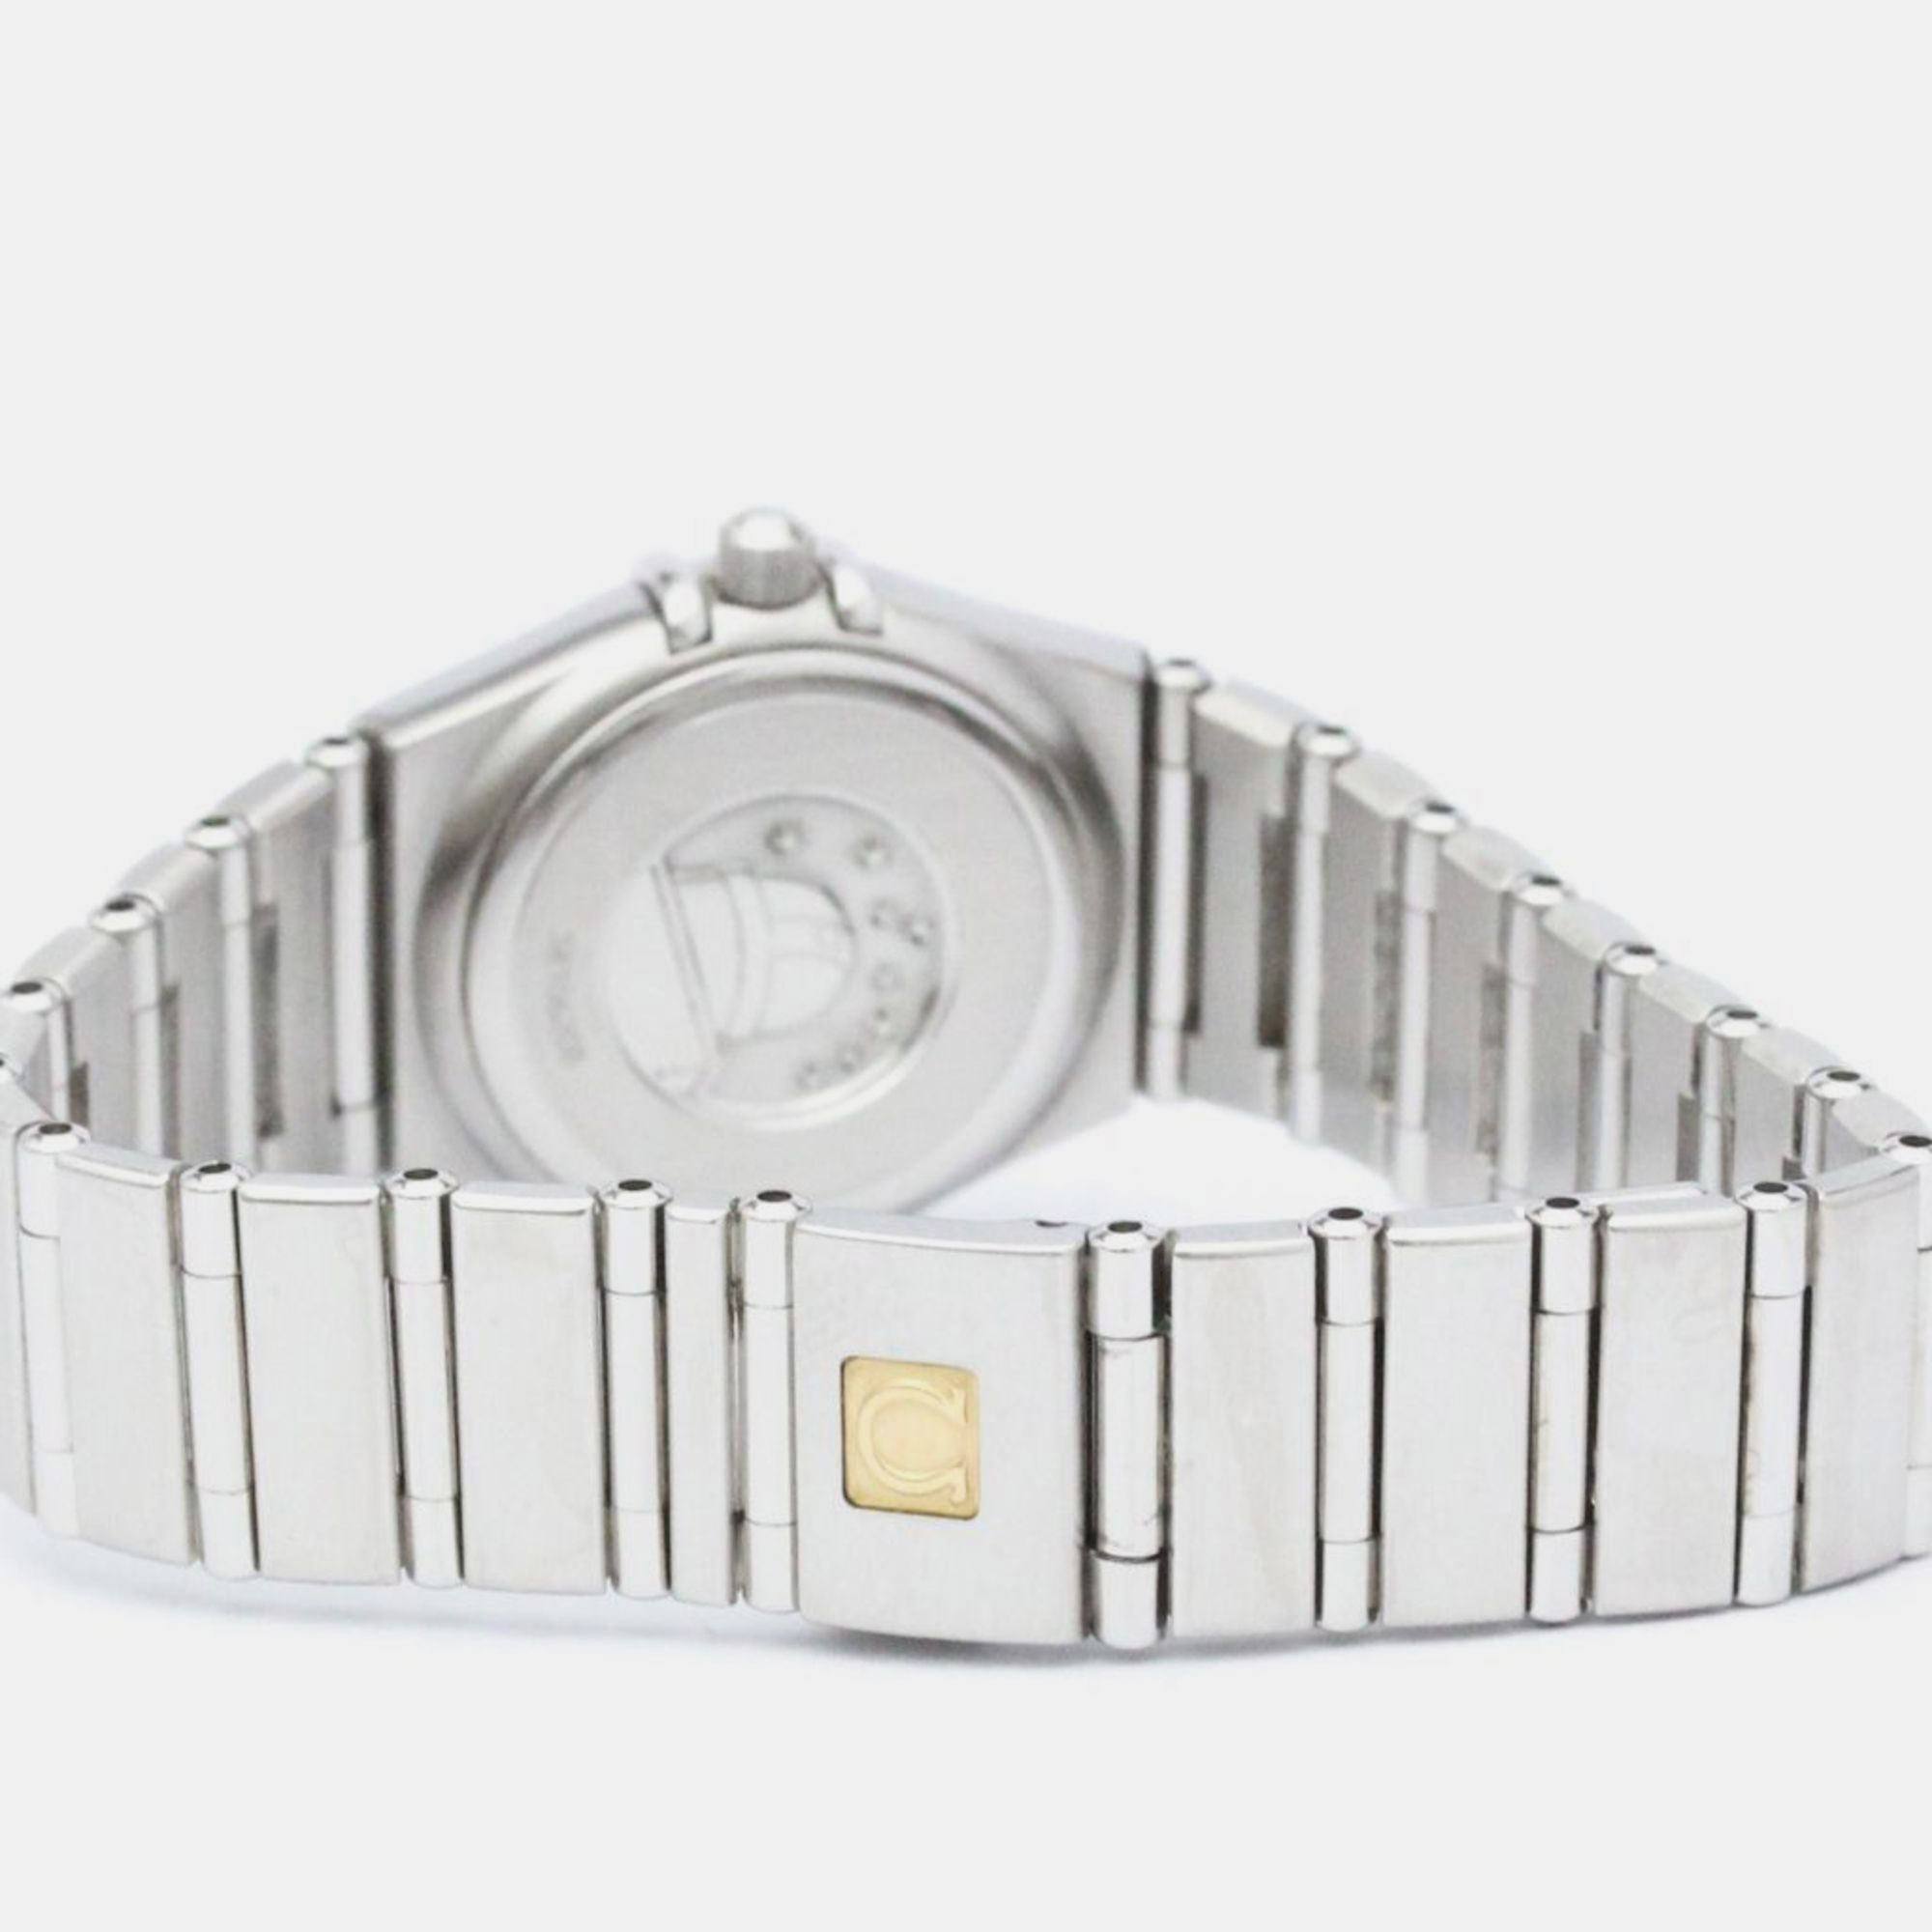 Omega Silver Stainless Steel Constellation 1562.30 Quartz Women's Wristwatch 22 Mm